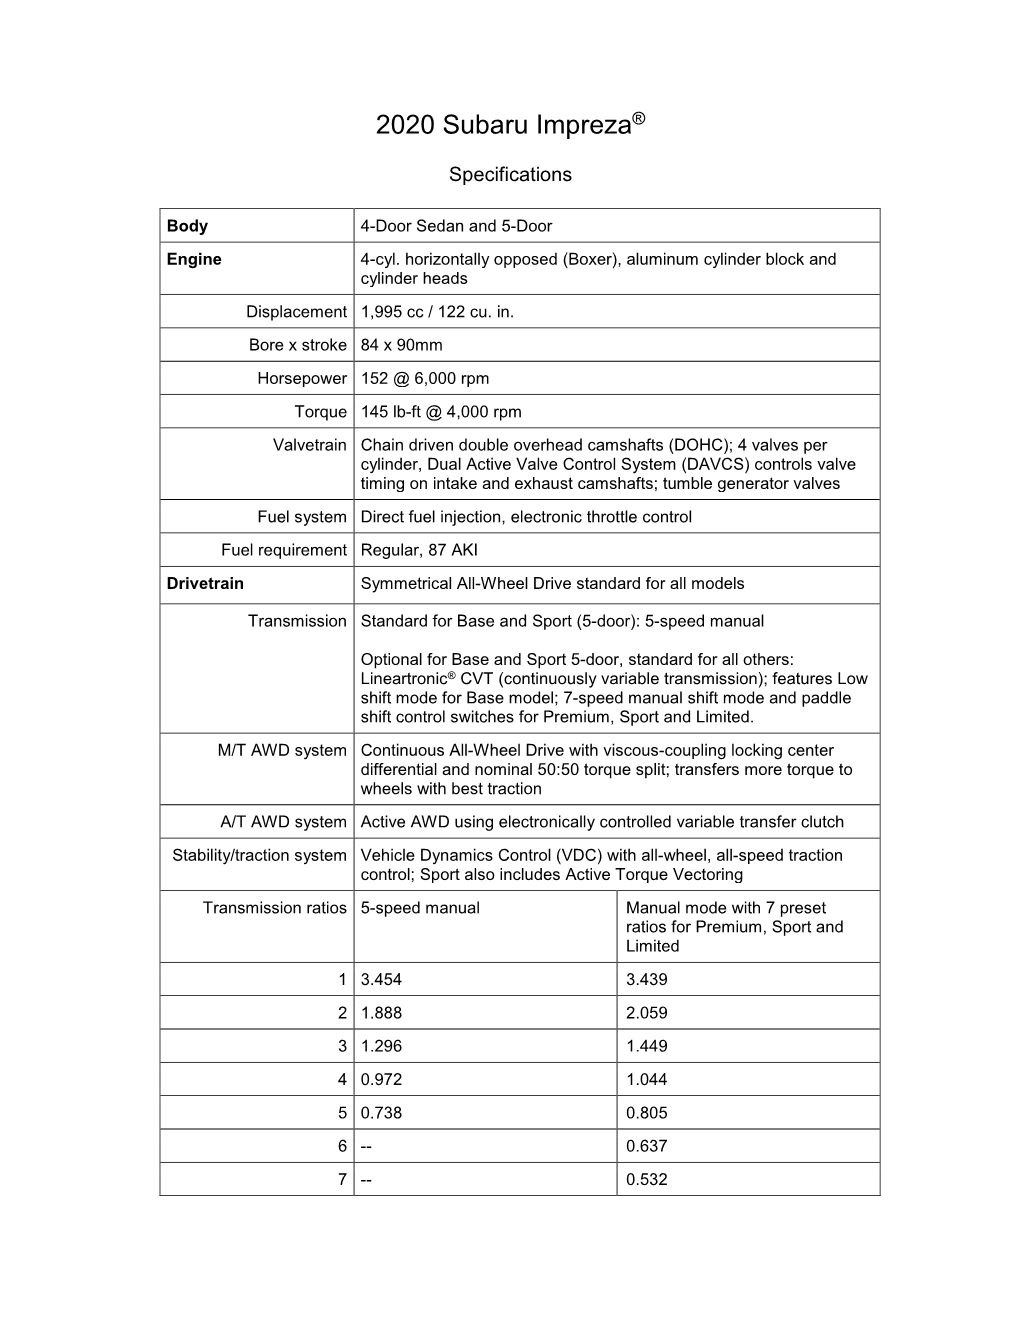 2020 Subaru Impreza Specifications / 2